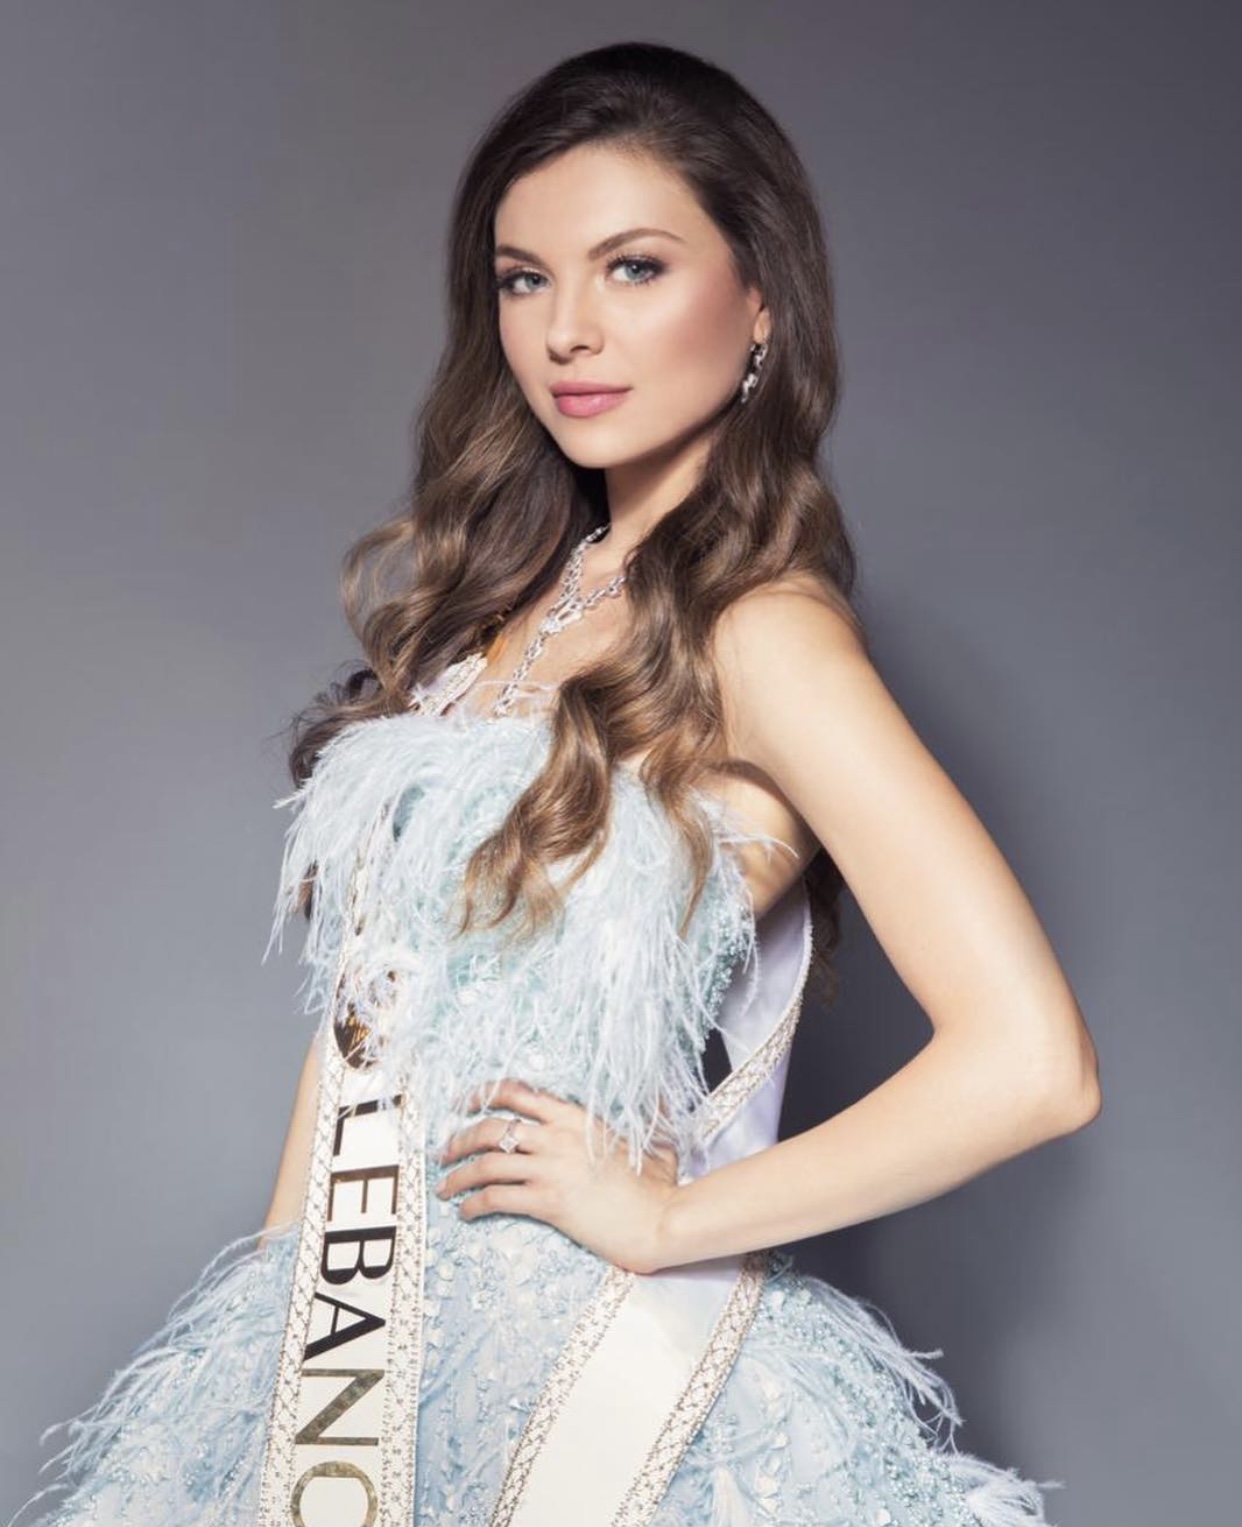 The atonishing Maya Reaidy will be part of Miss Elite Jury